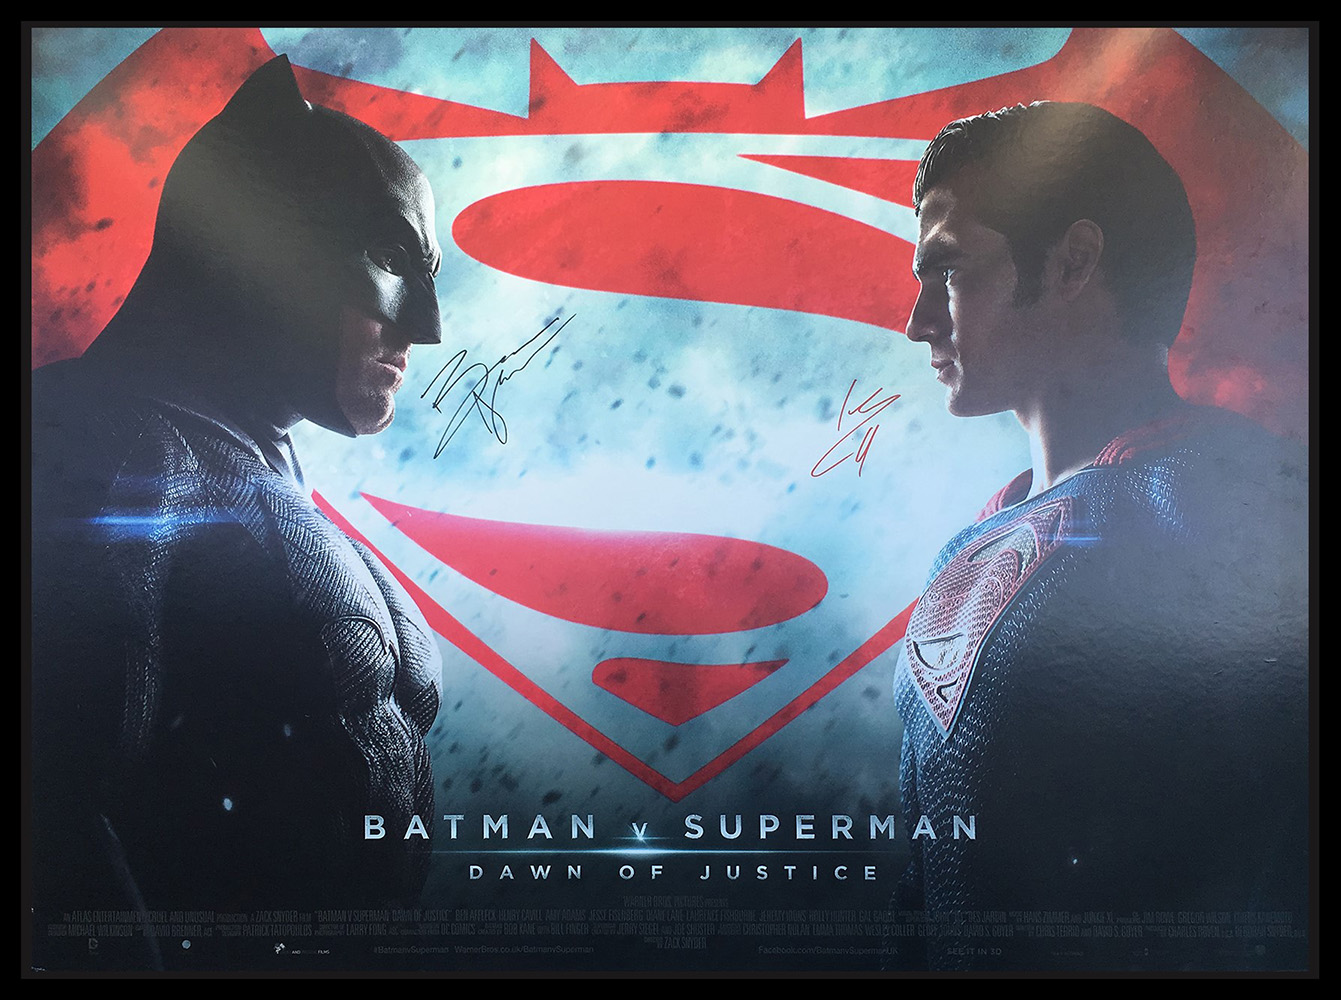 Framed Batman v Superman Poster Signed by Ben Affleck & Henry Cavill